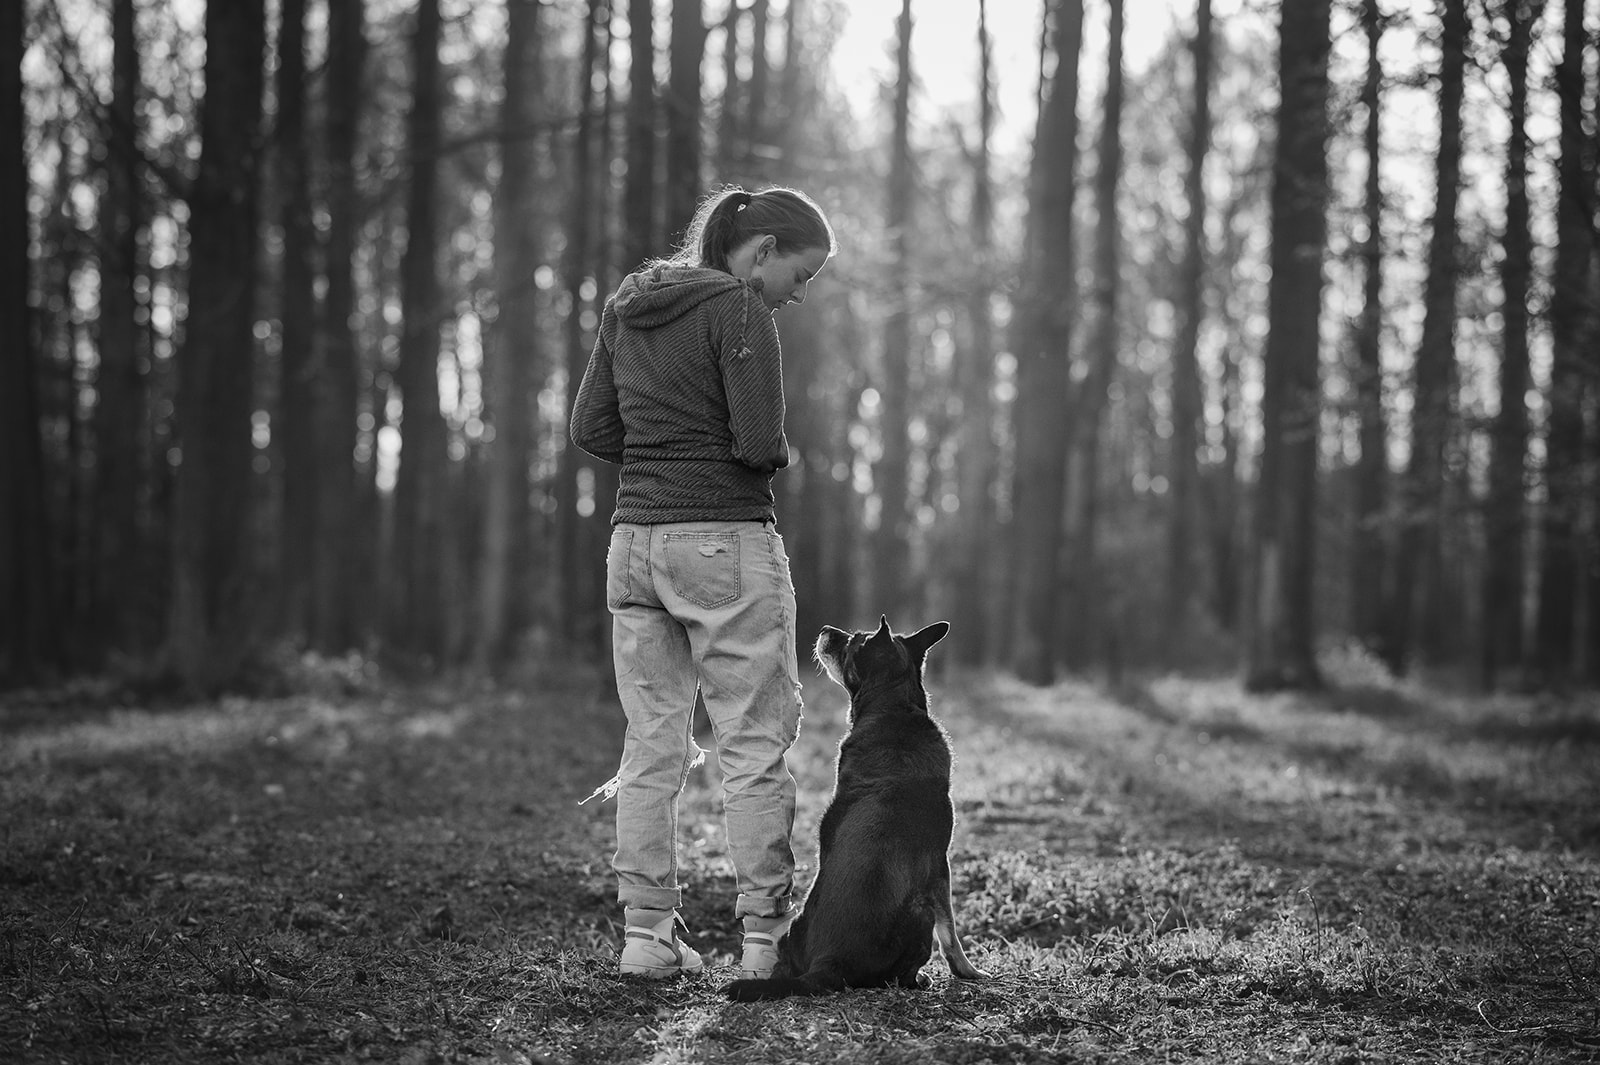 mens en hondenfotograaf Annelies Huylebroeck aalst België oost-vlaanderen